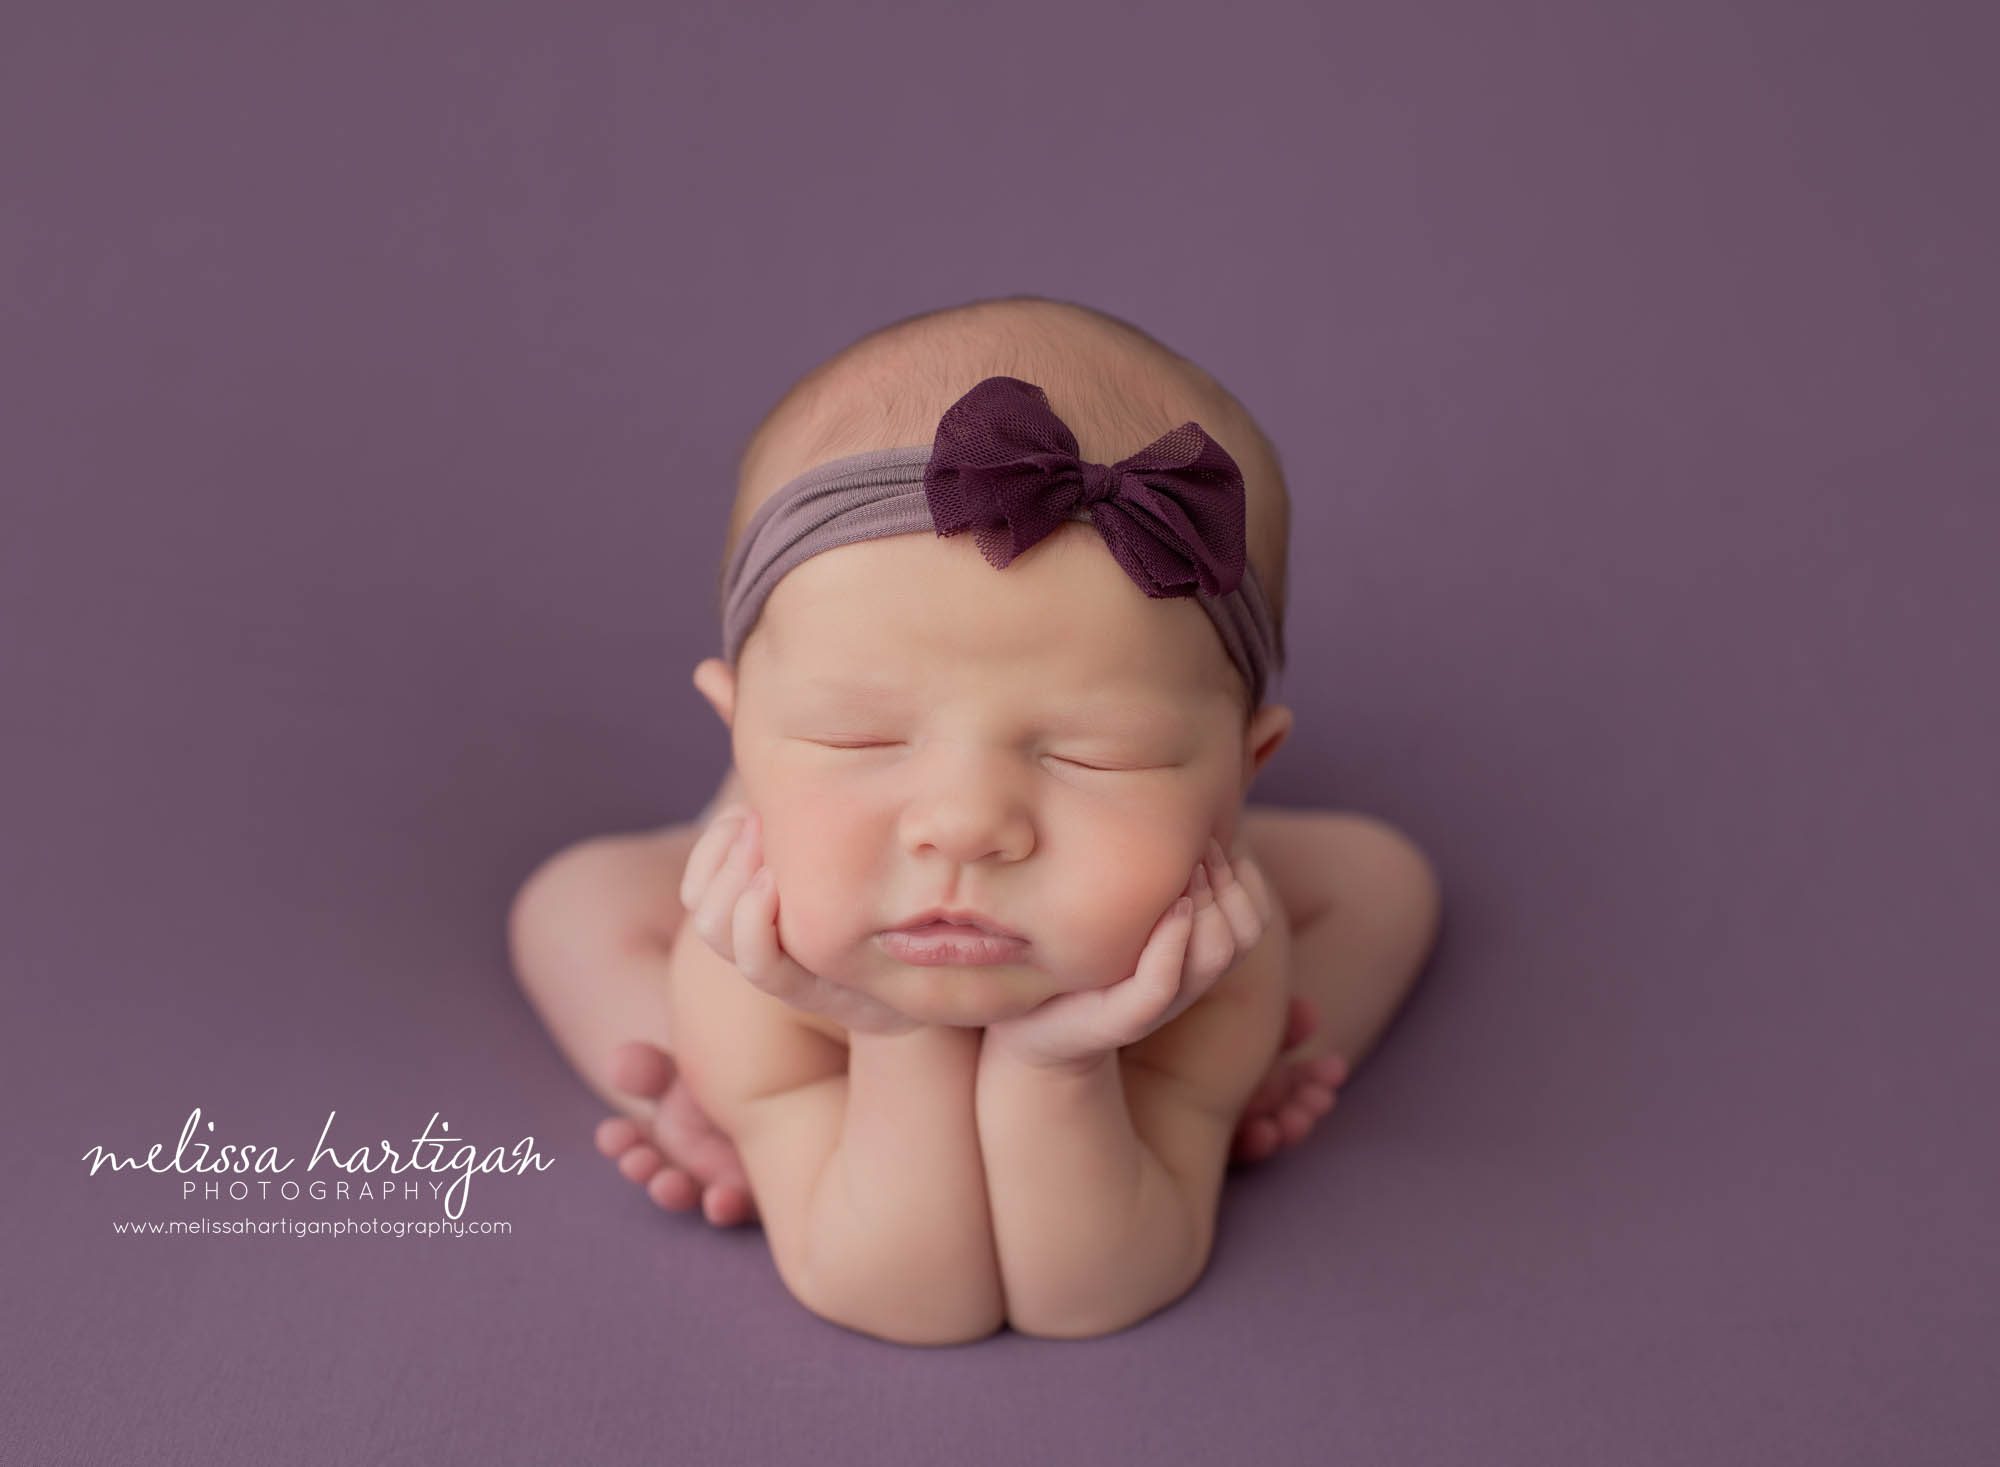 Baby girl posed on purple backdrop with purple bow headband